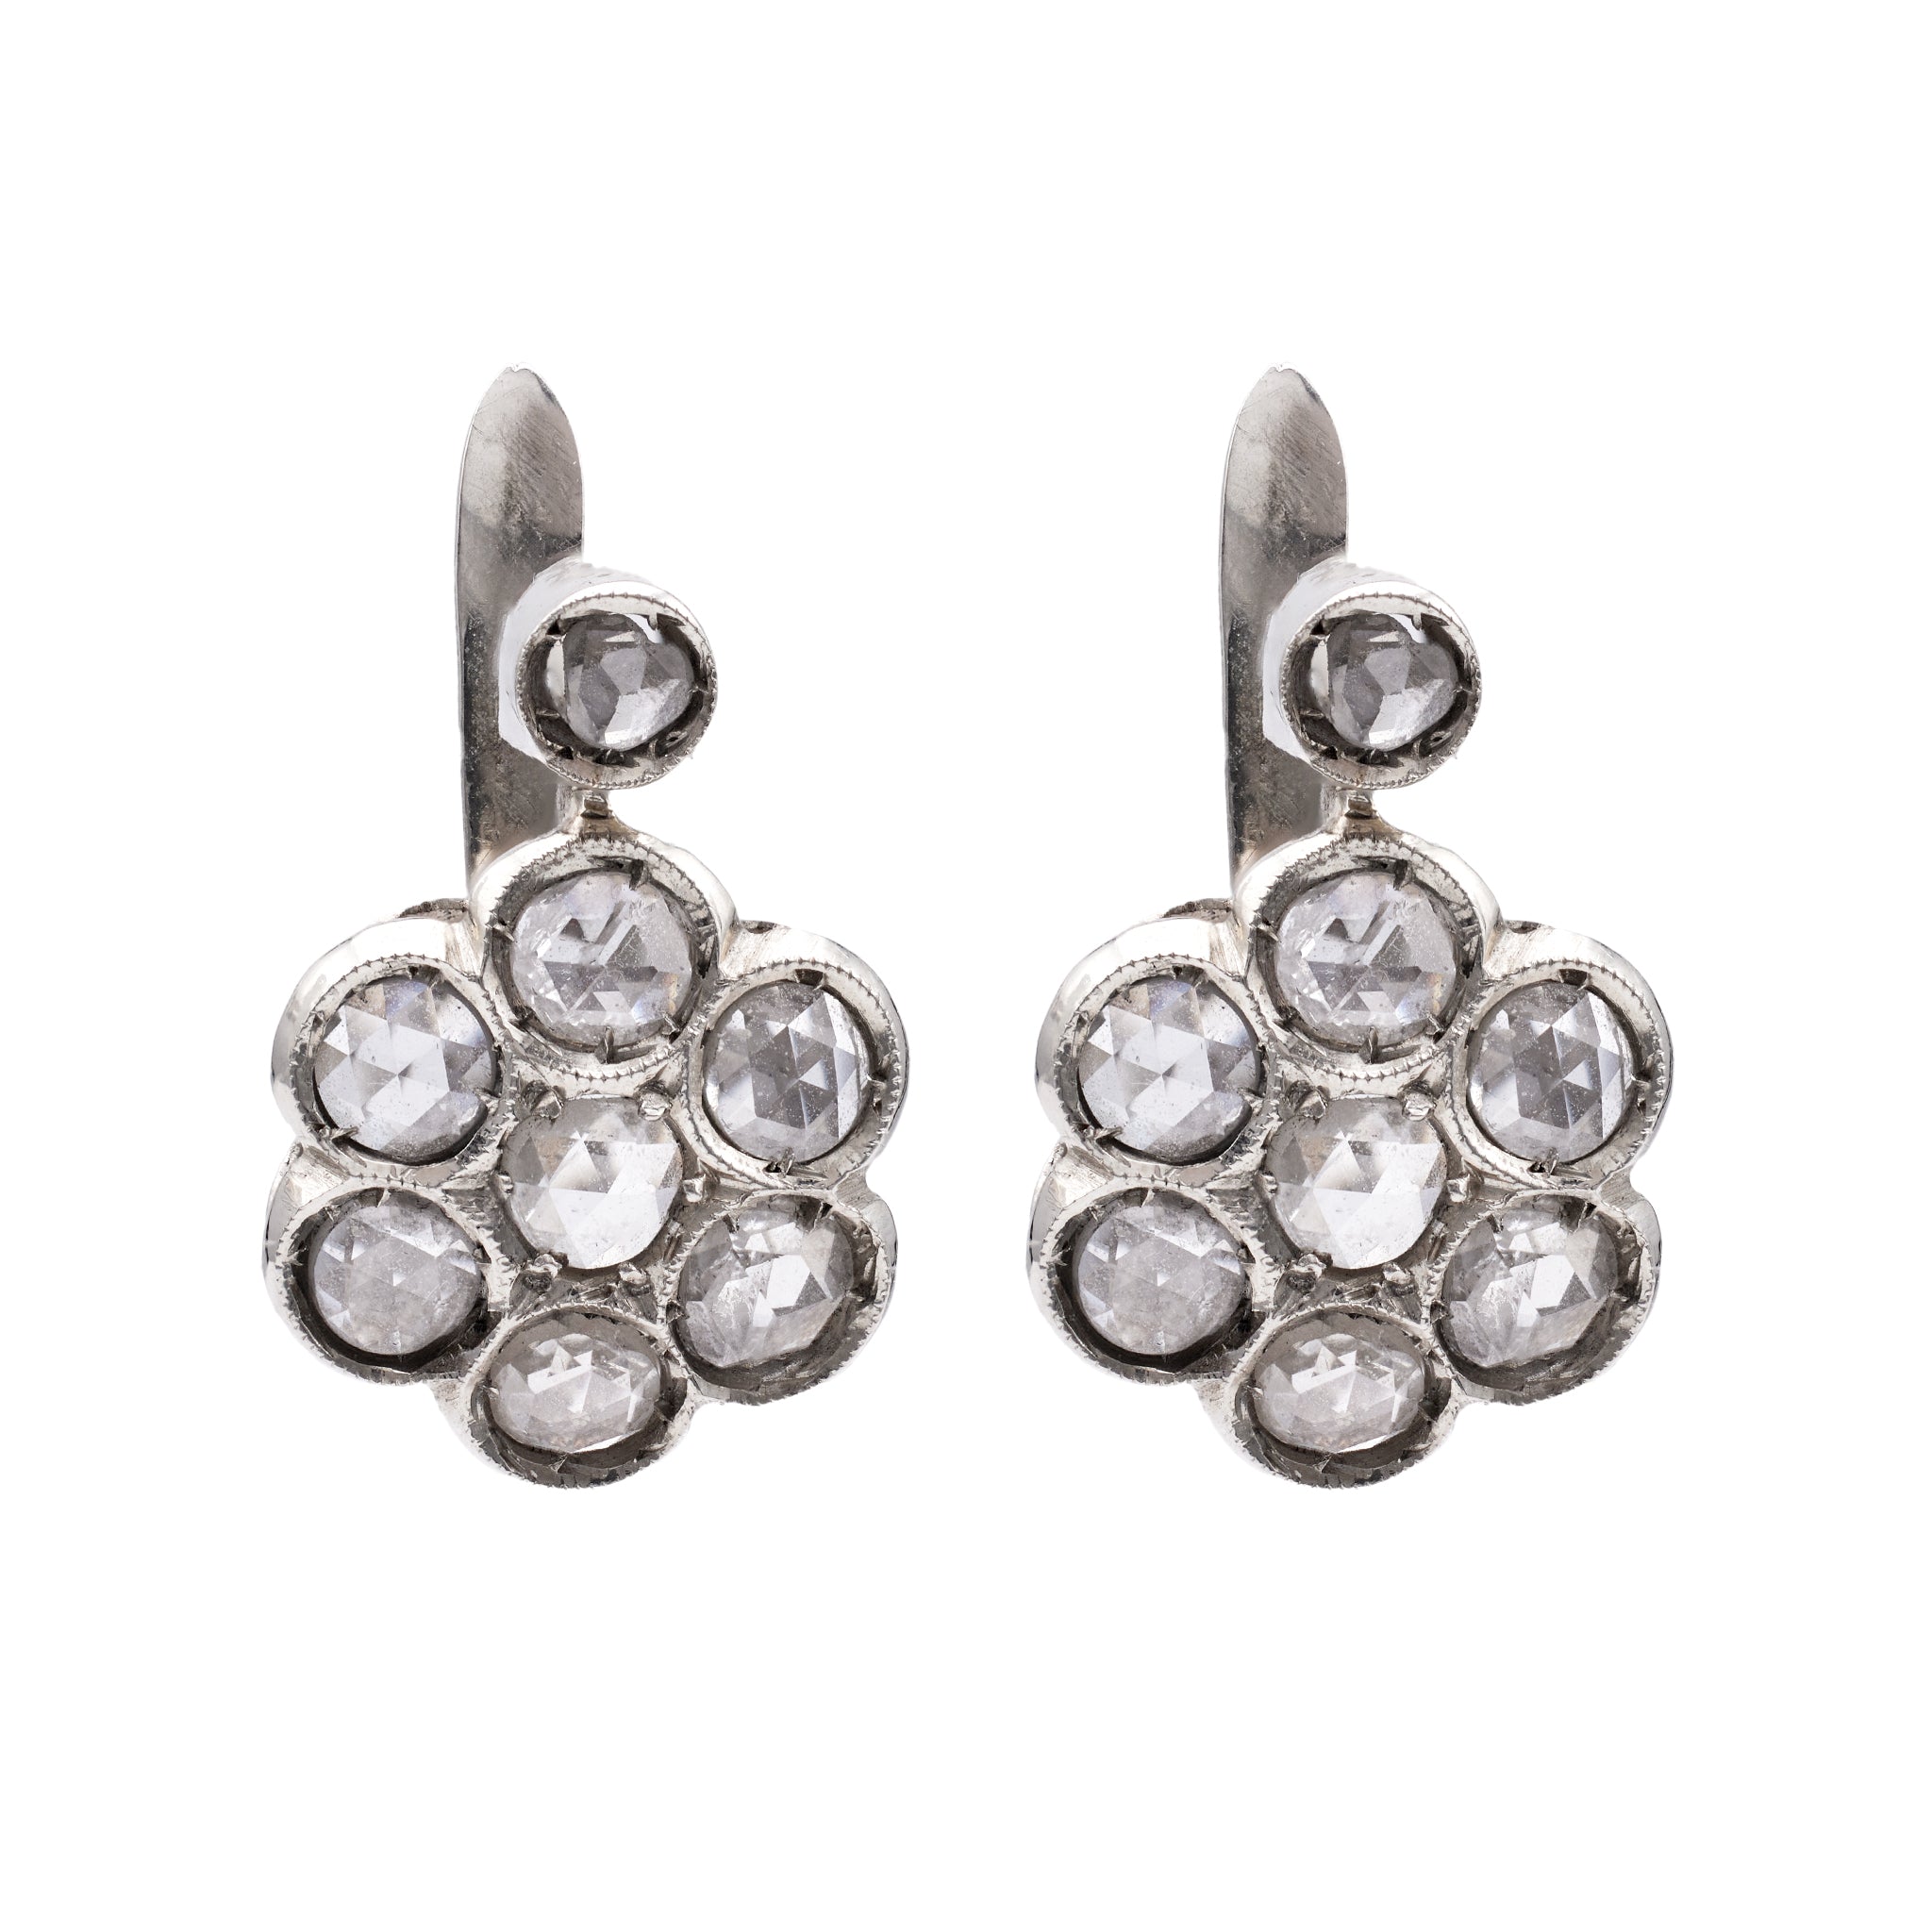 Pair of Retro Rose Cut Diamond 18k White Gold Cluster Earrings Earrings Jack Weir & Sons   